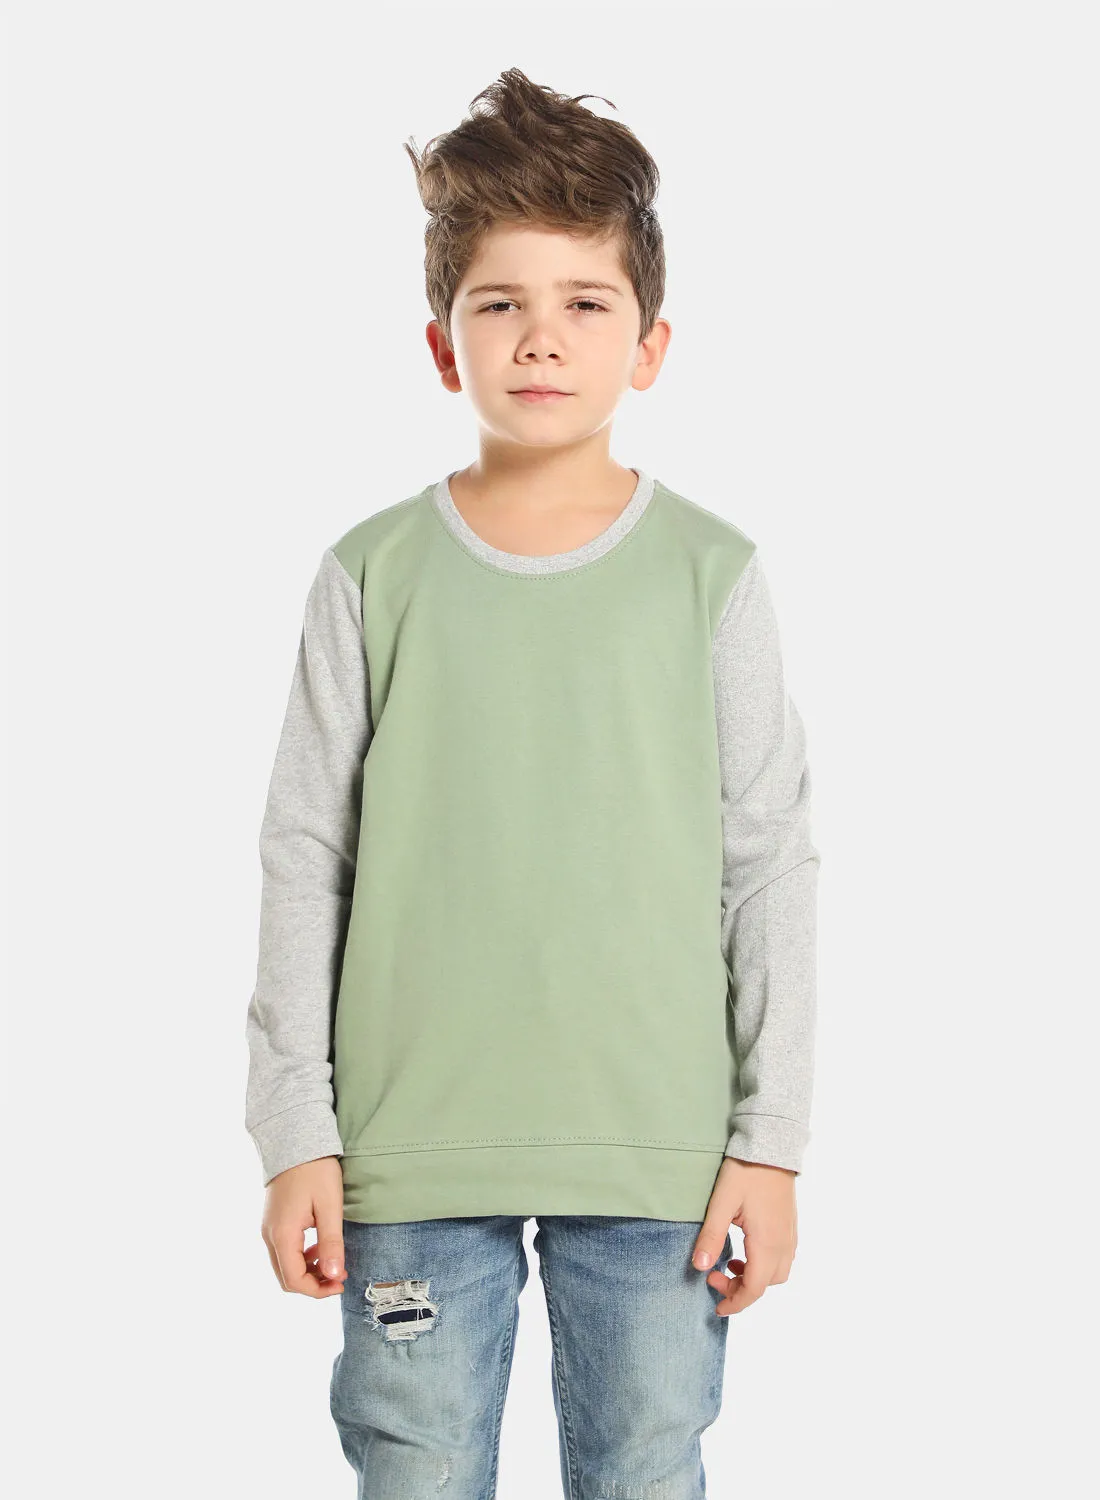 QUWA Boys Colorblock Cotton Casual Sweatshirt Green